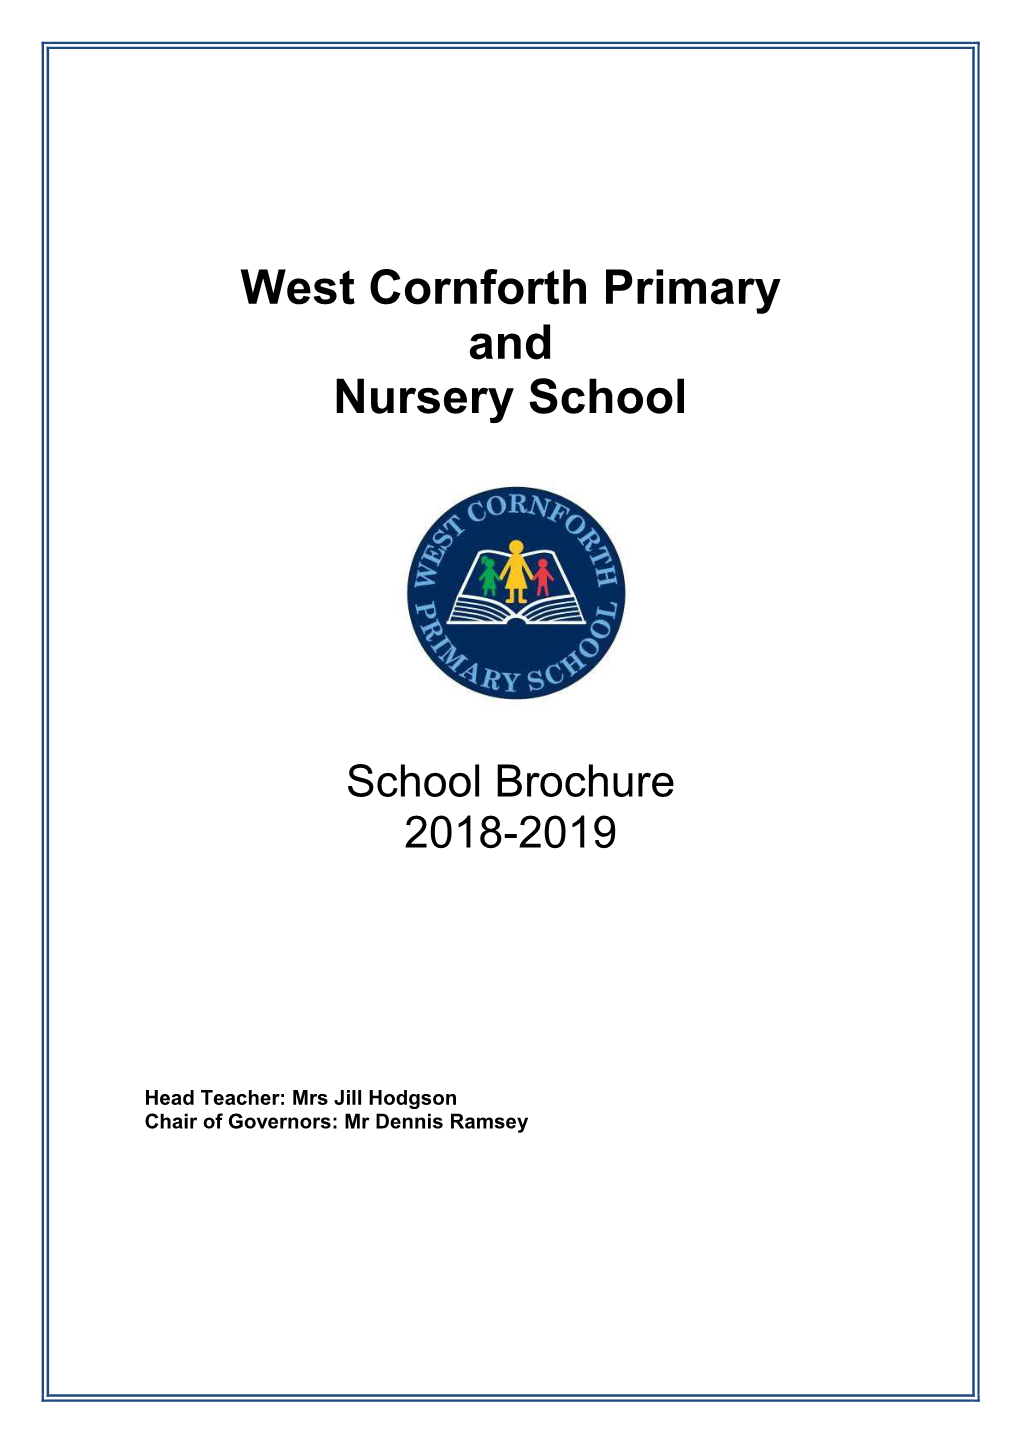 West Cornforth Primary and Nursery School